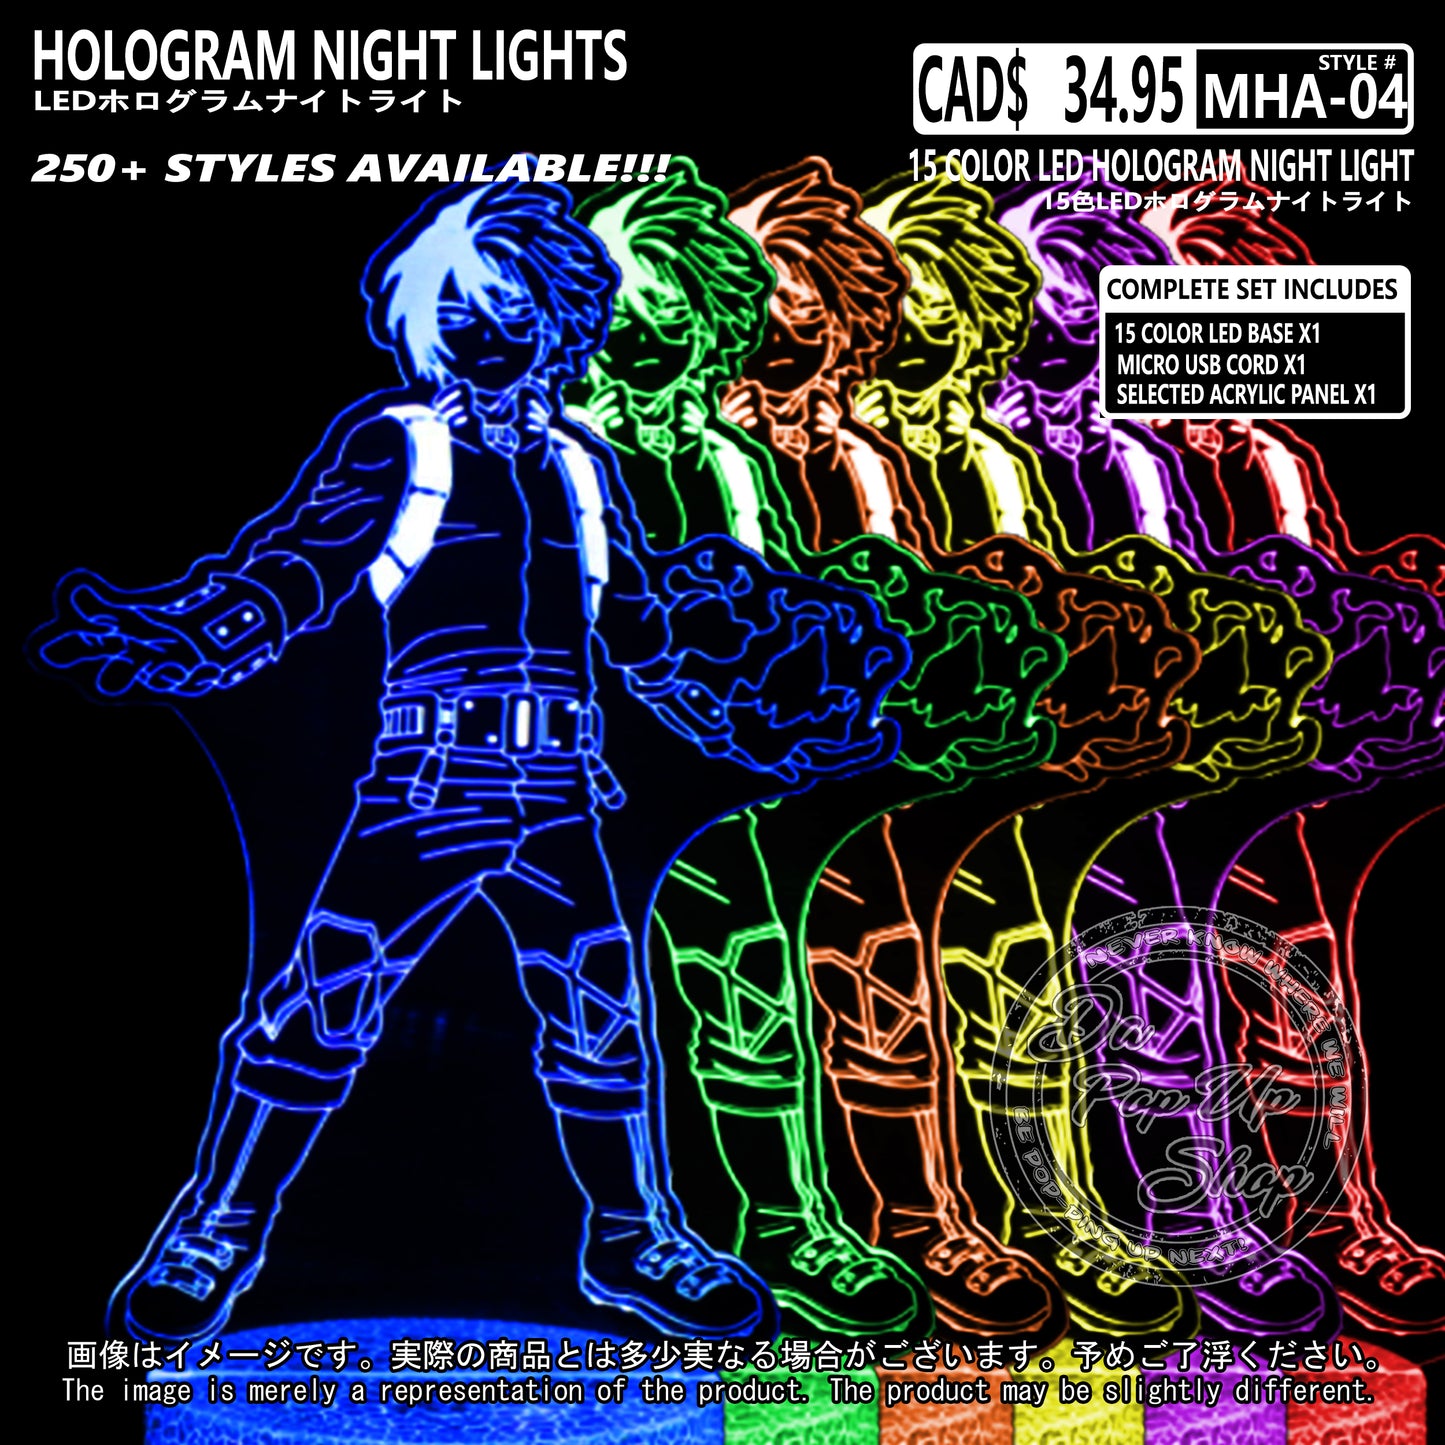 (MHA-04) My Hero Academia Hologram LED Night Light